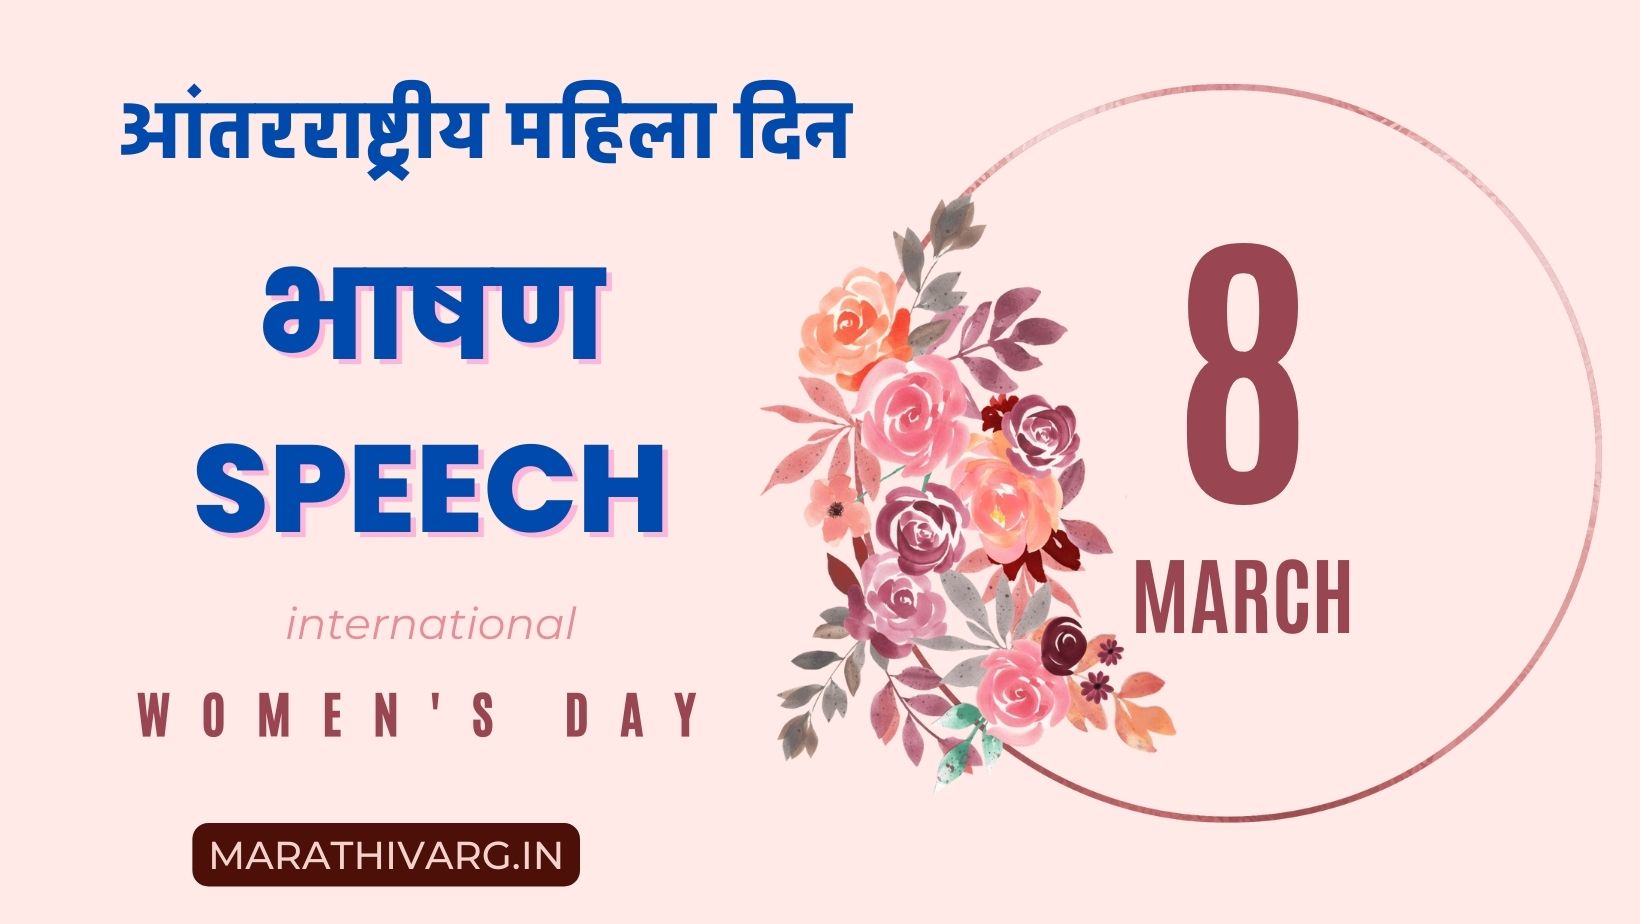 celebrating women's achievements: a tribute to international women's day